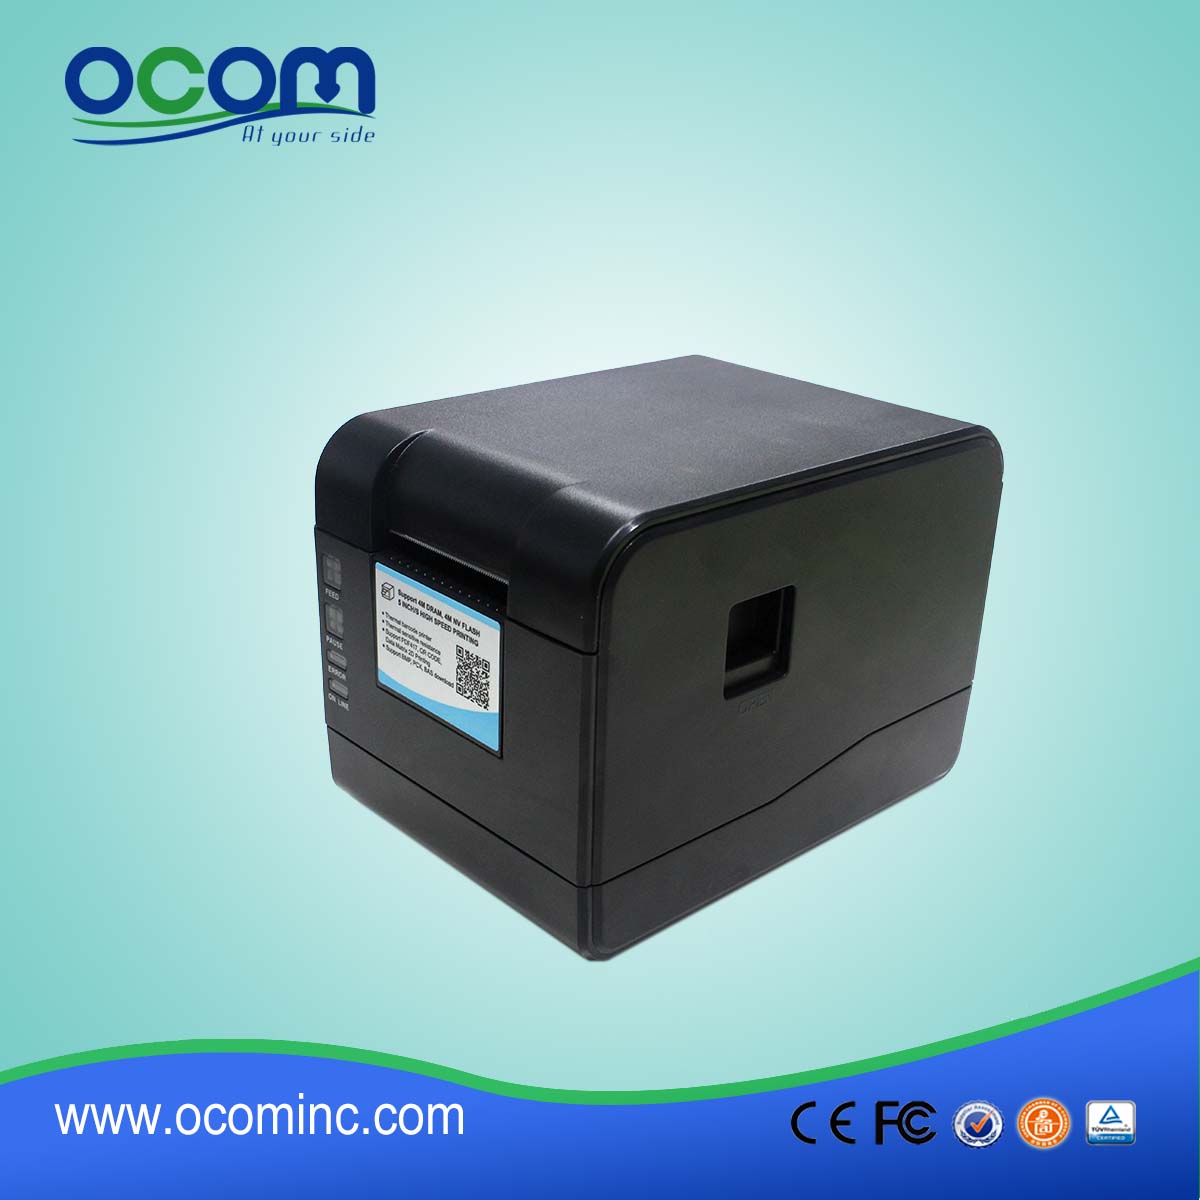 OCBP-006 Impresora de etiquetas de código de barras térmica directa de 2 "Admite papel de rollo térmico / papel adhesivo